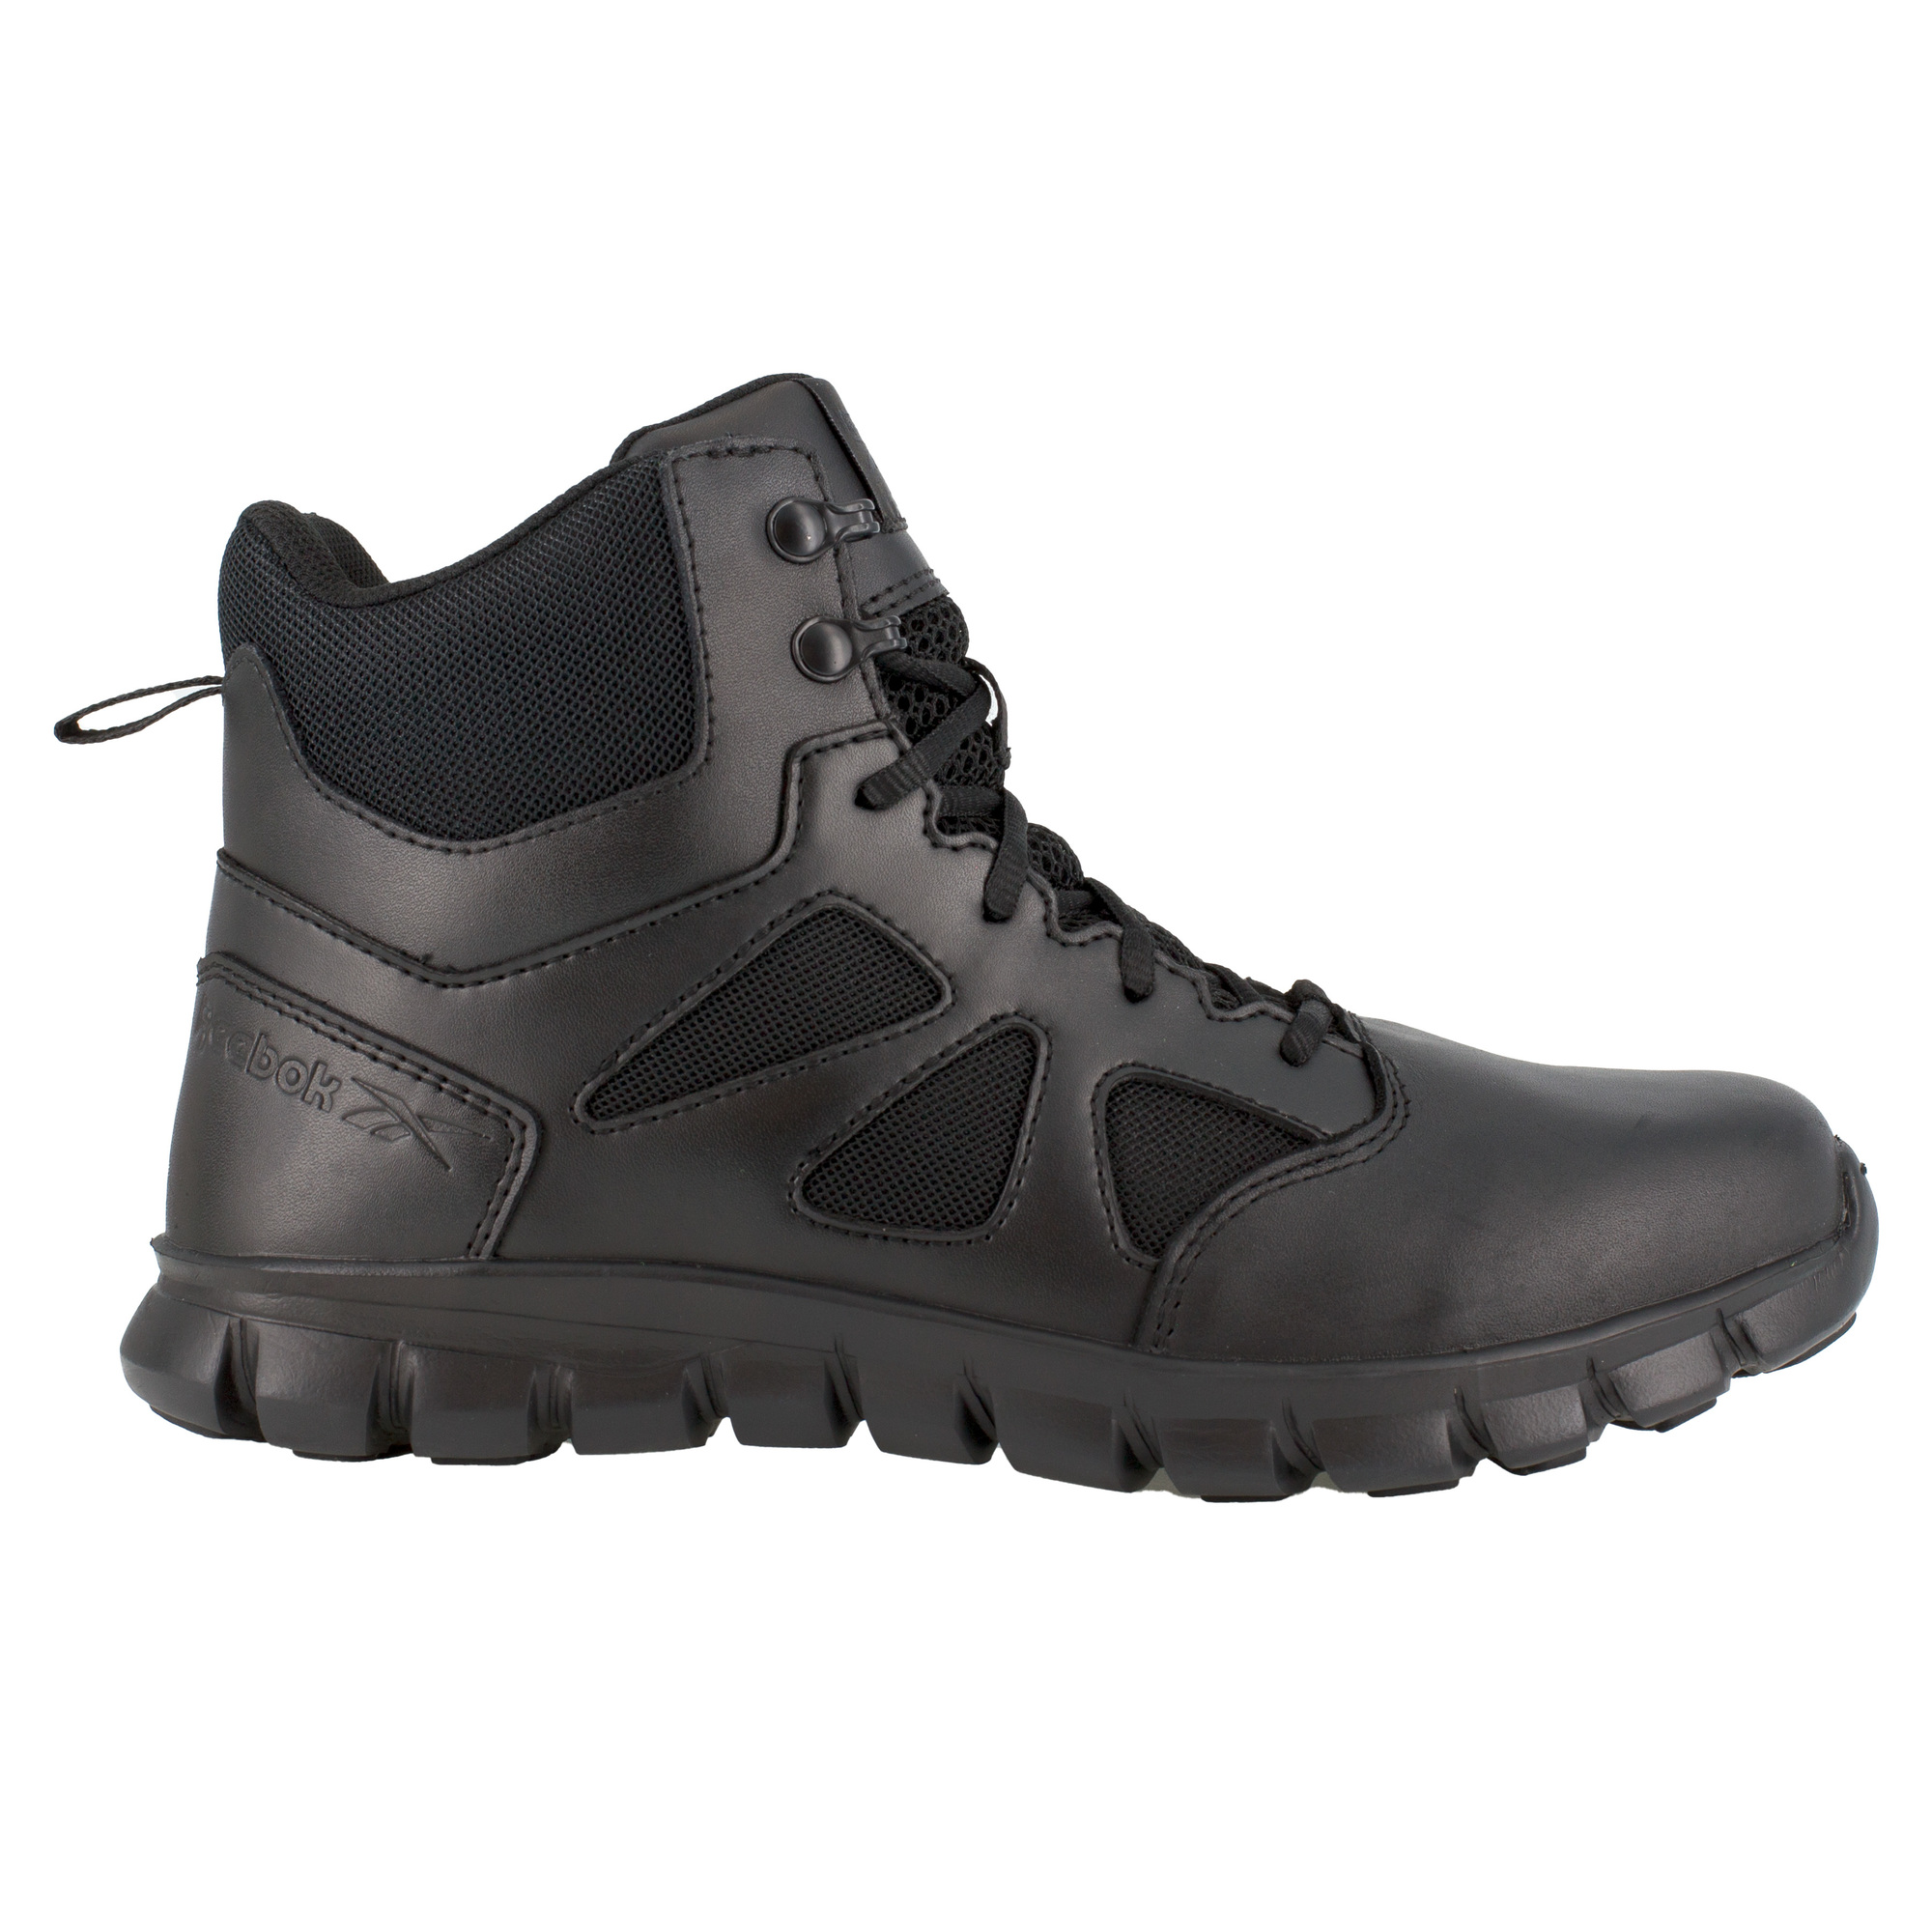 Reebok, 6Inch Tactical Boot w/Side Zipper, Size 6 1/2, Width Medium, Color Black, Model RB086